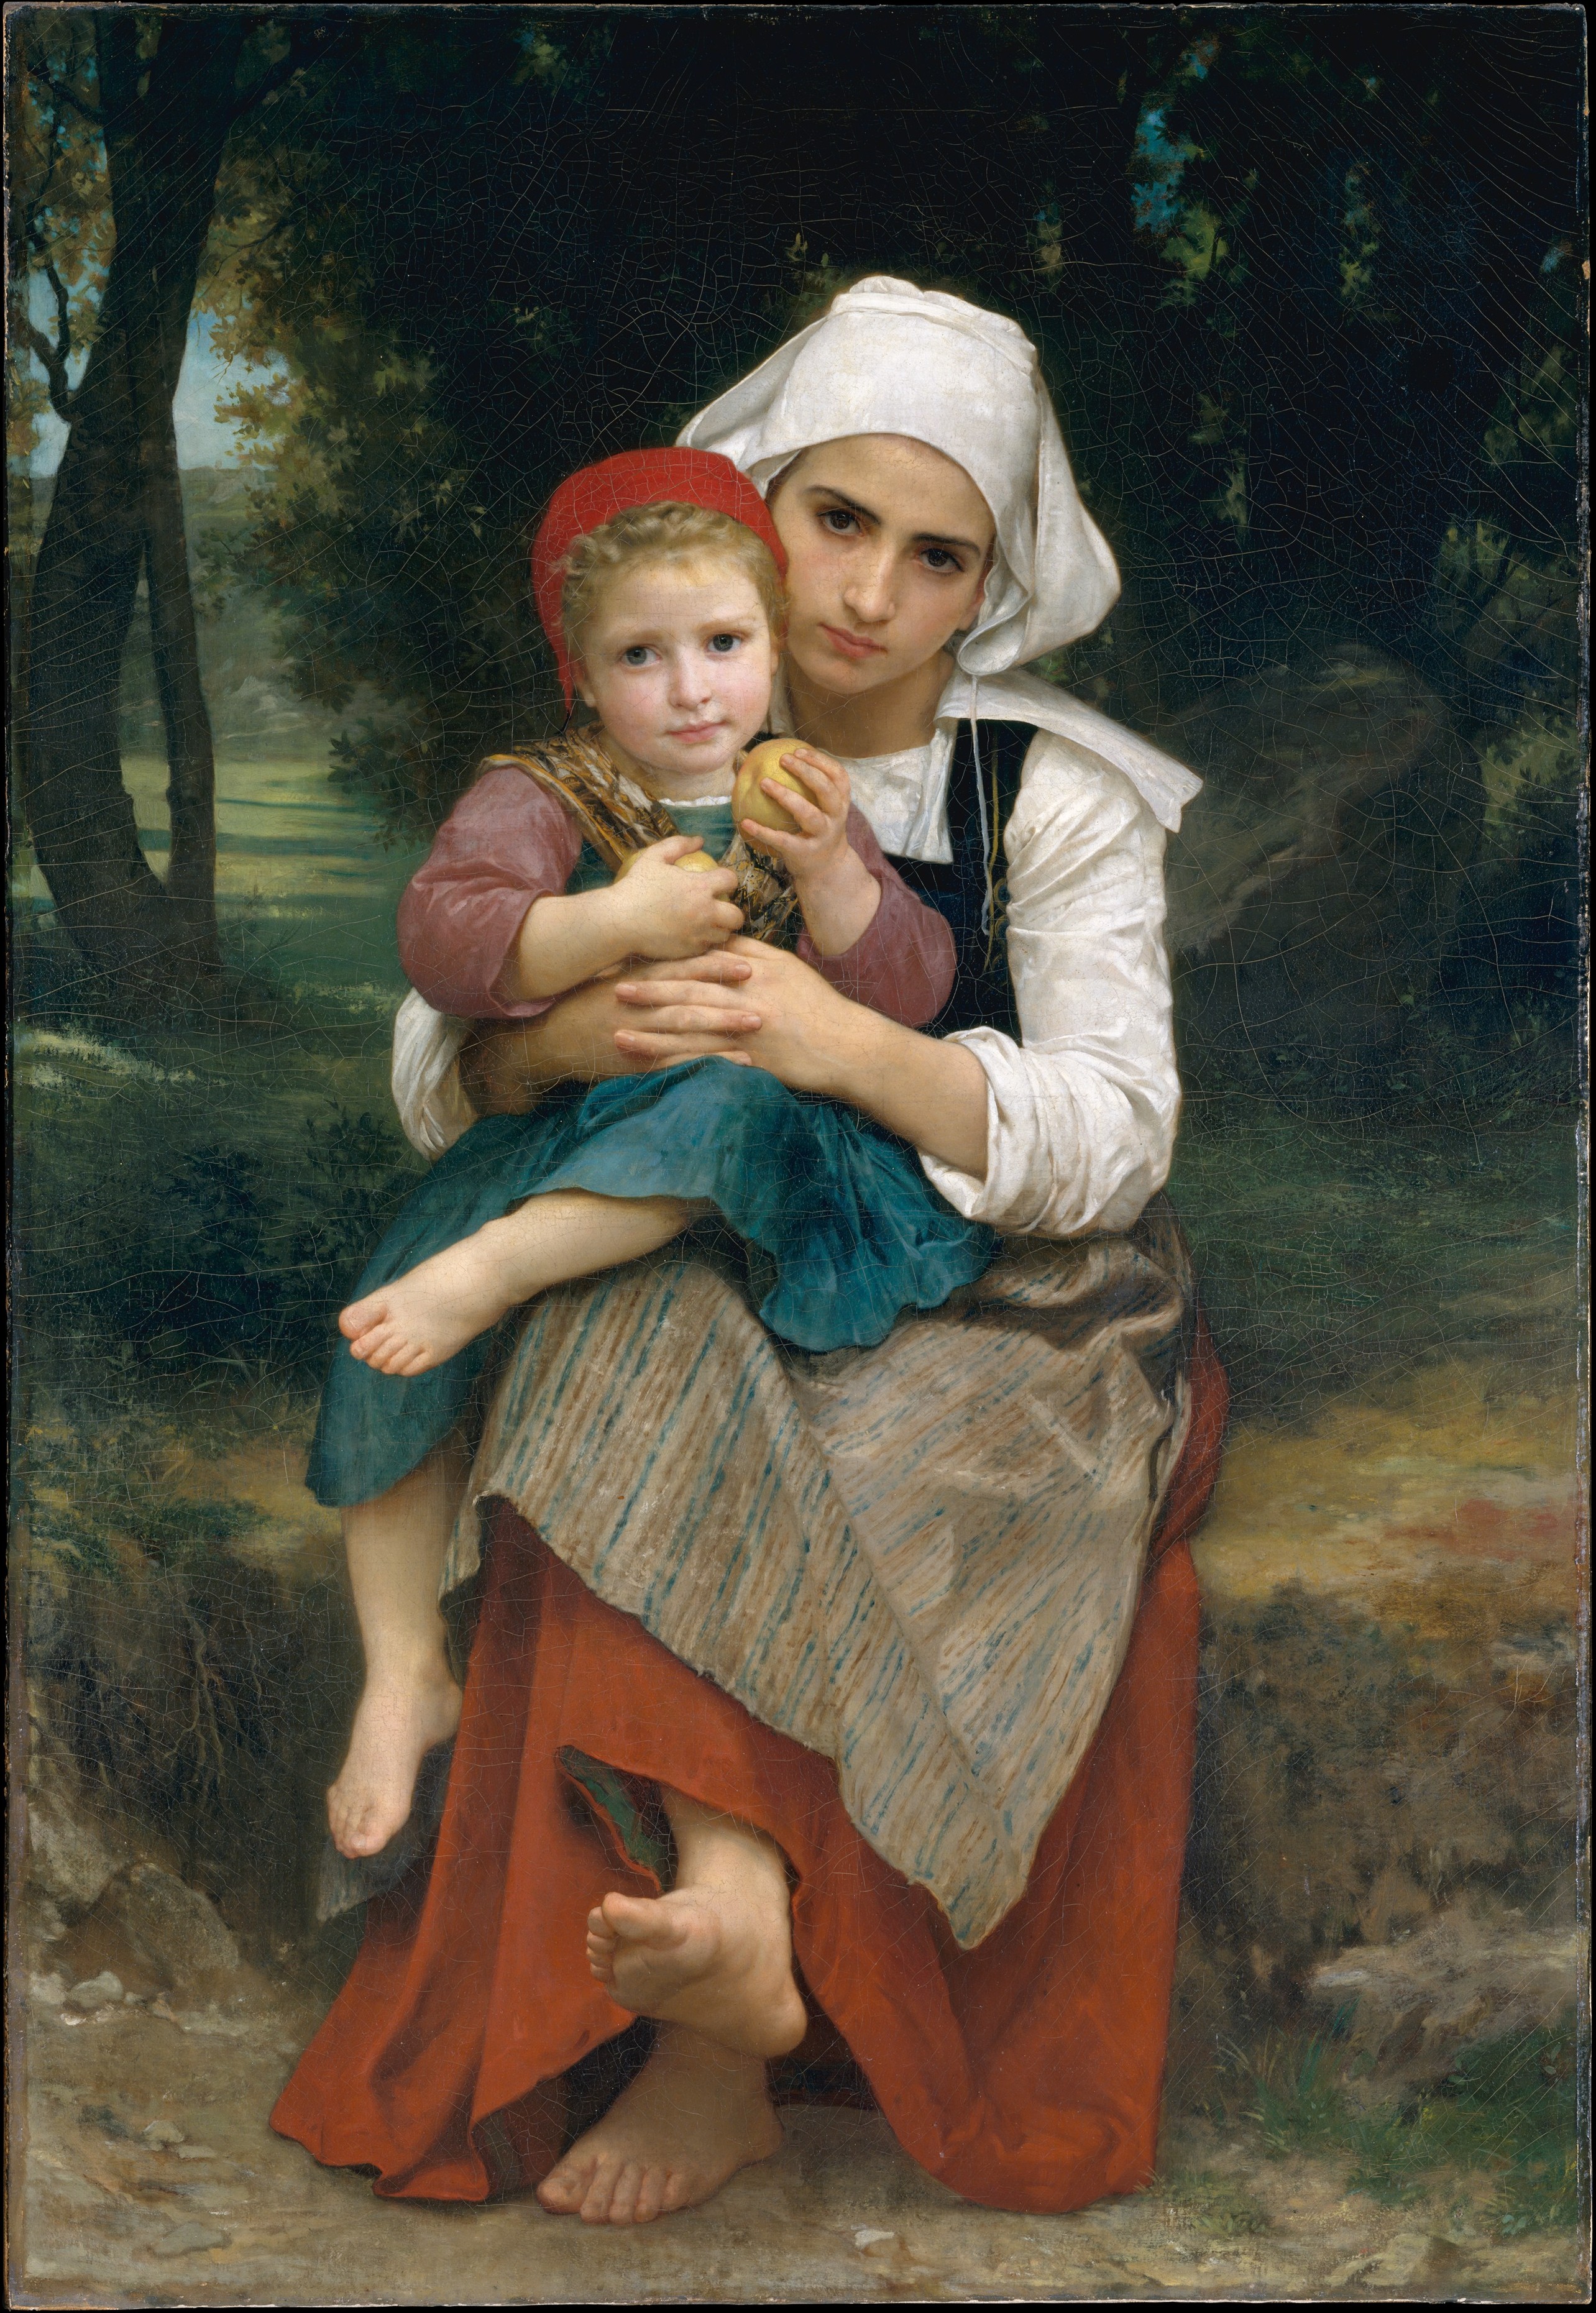 Breton brother and sister, par William Bouguereau (MET)